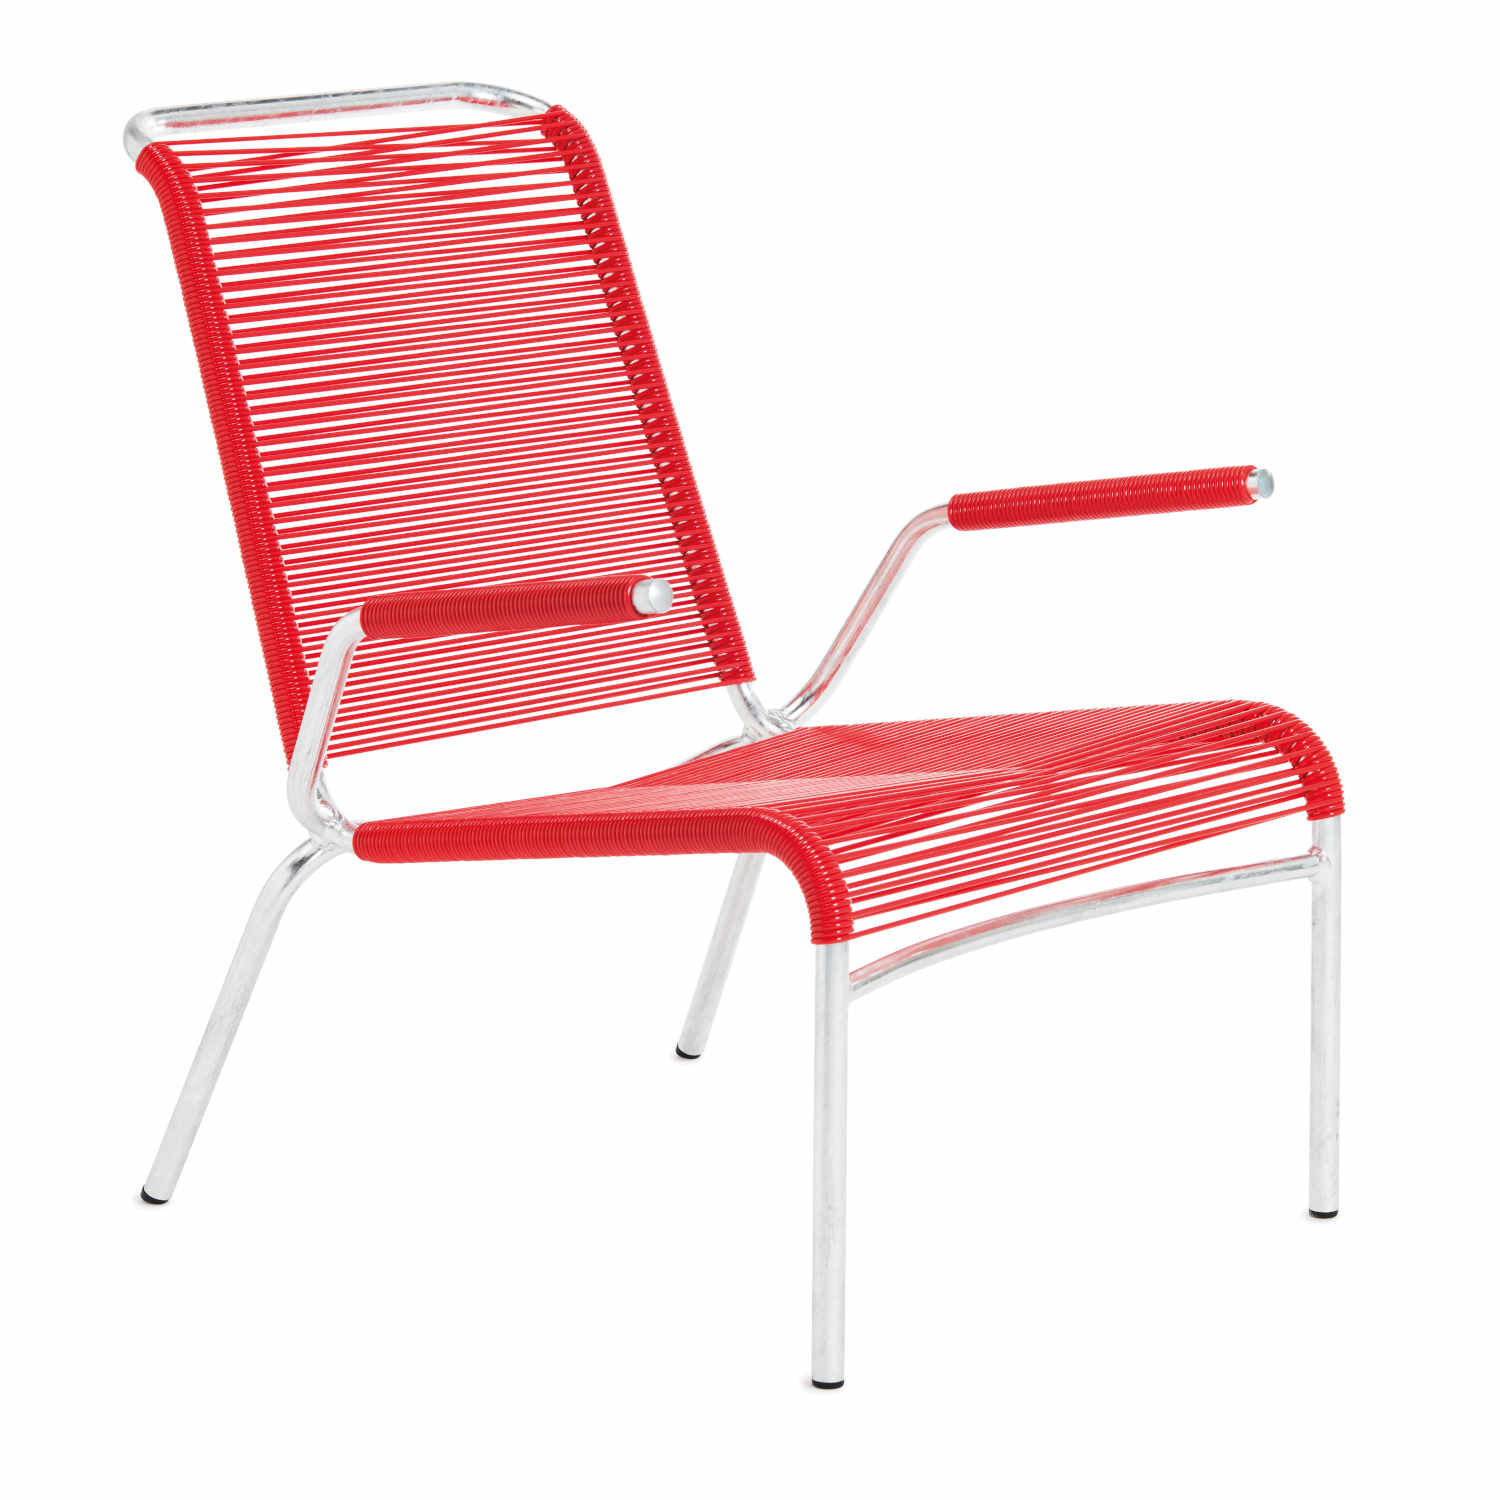 Altorfer Modell 1142 Lounge Sessel, Farbe rot von Embru